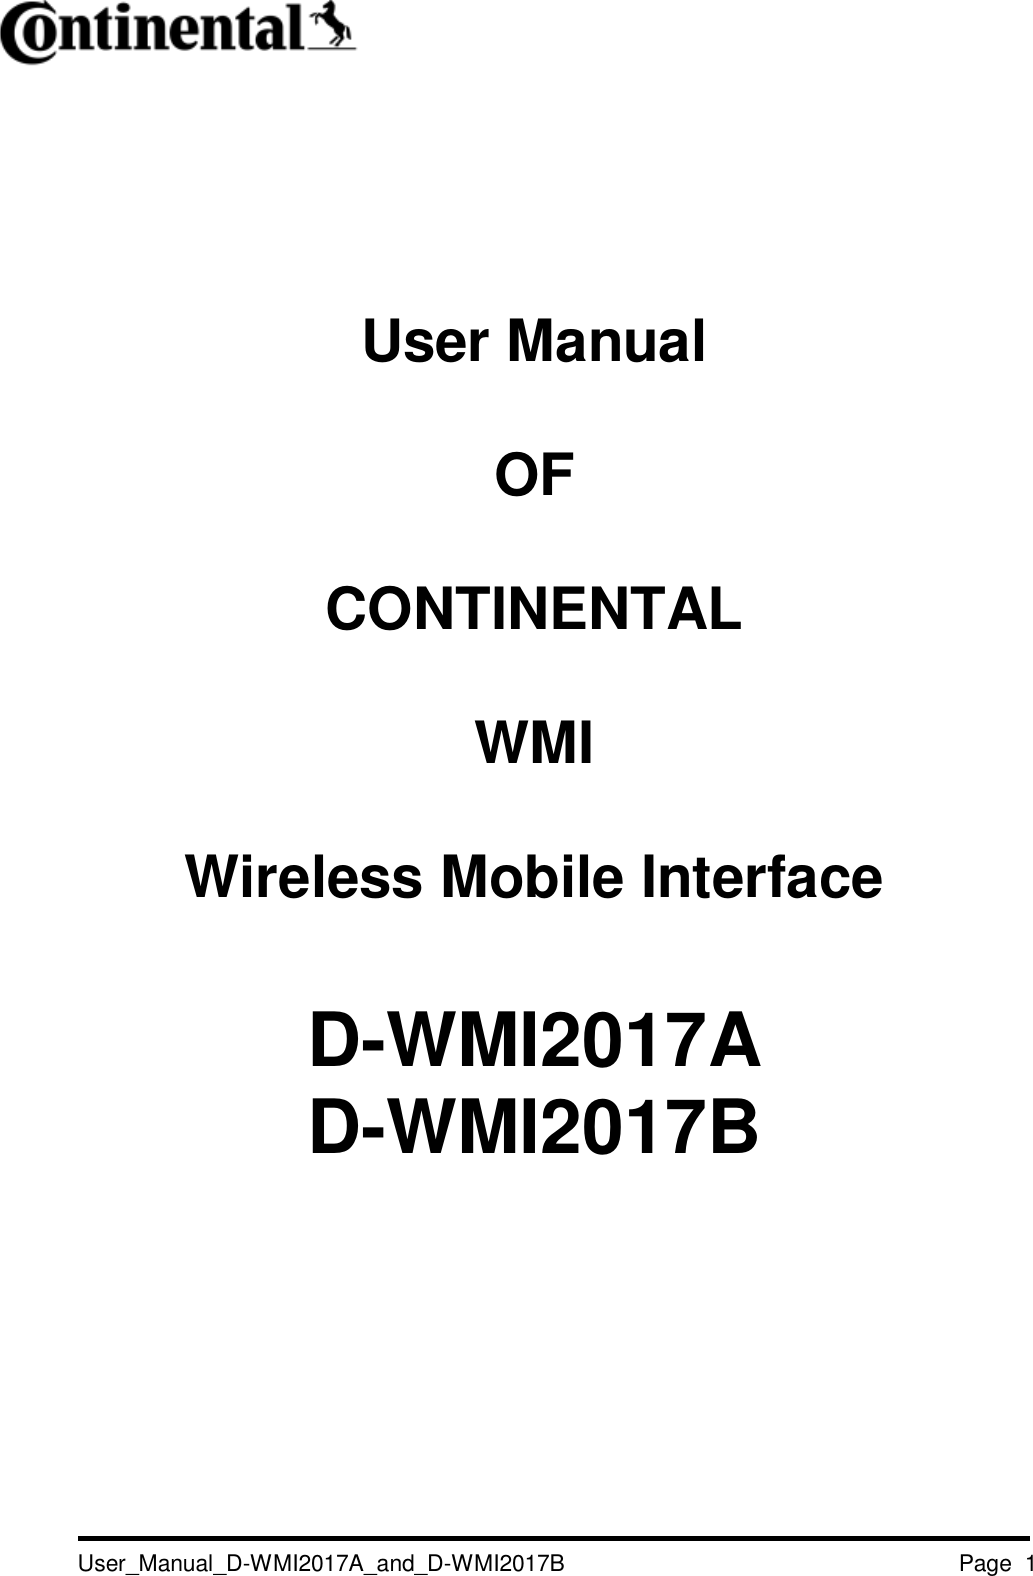   User_Manual_D-WMI2017A_and_D-WMI2017B Page  1           User Manual  OF  CONTINENTAL  WMI  Wireless Mobile Interface  D-WMI2017A D-WMI2017B     